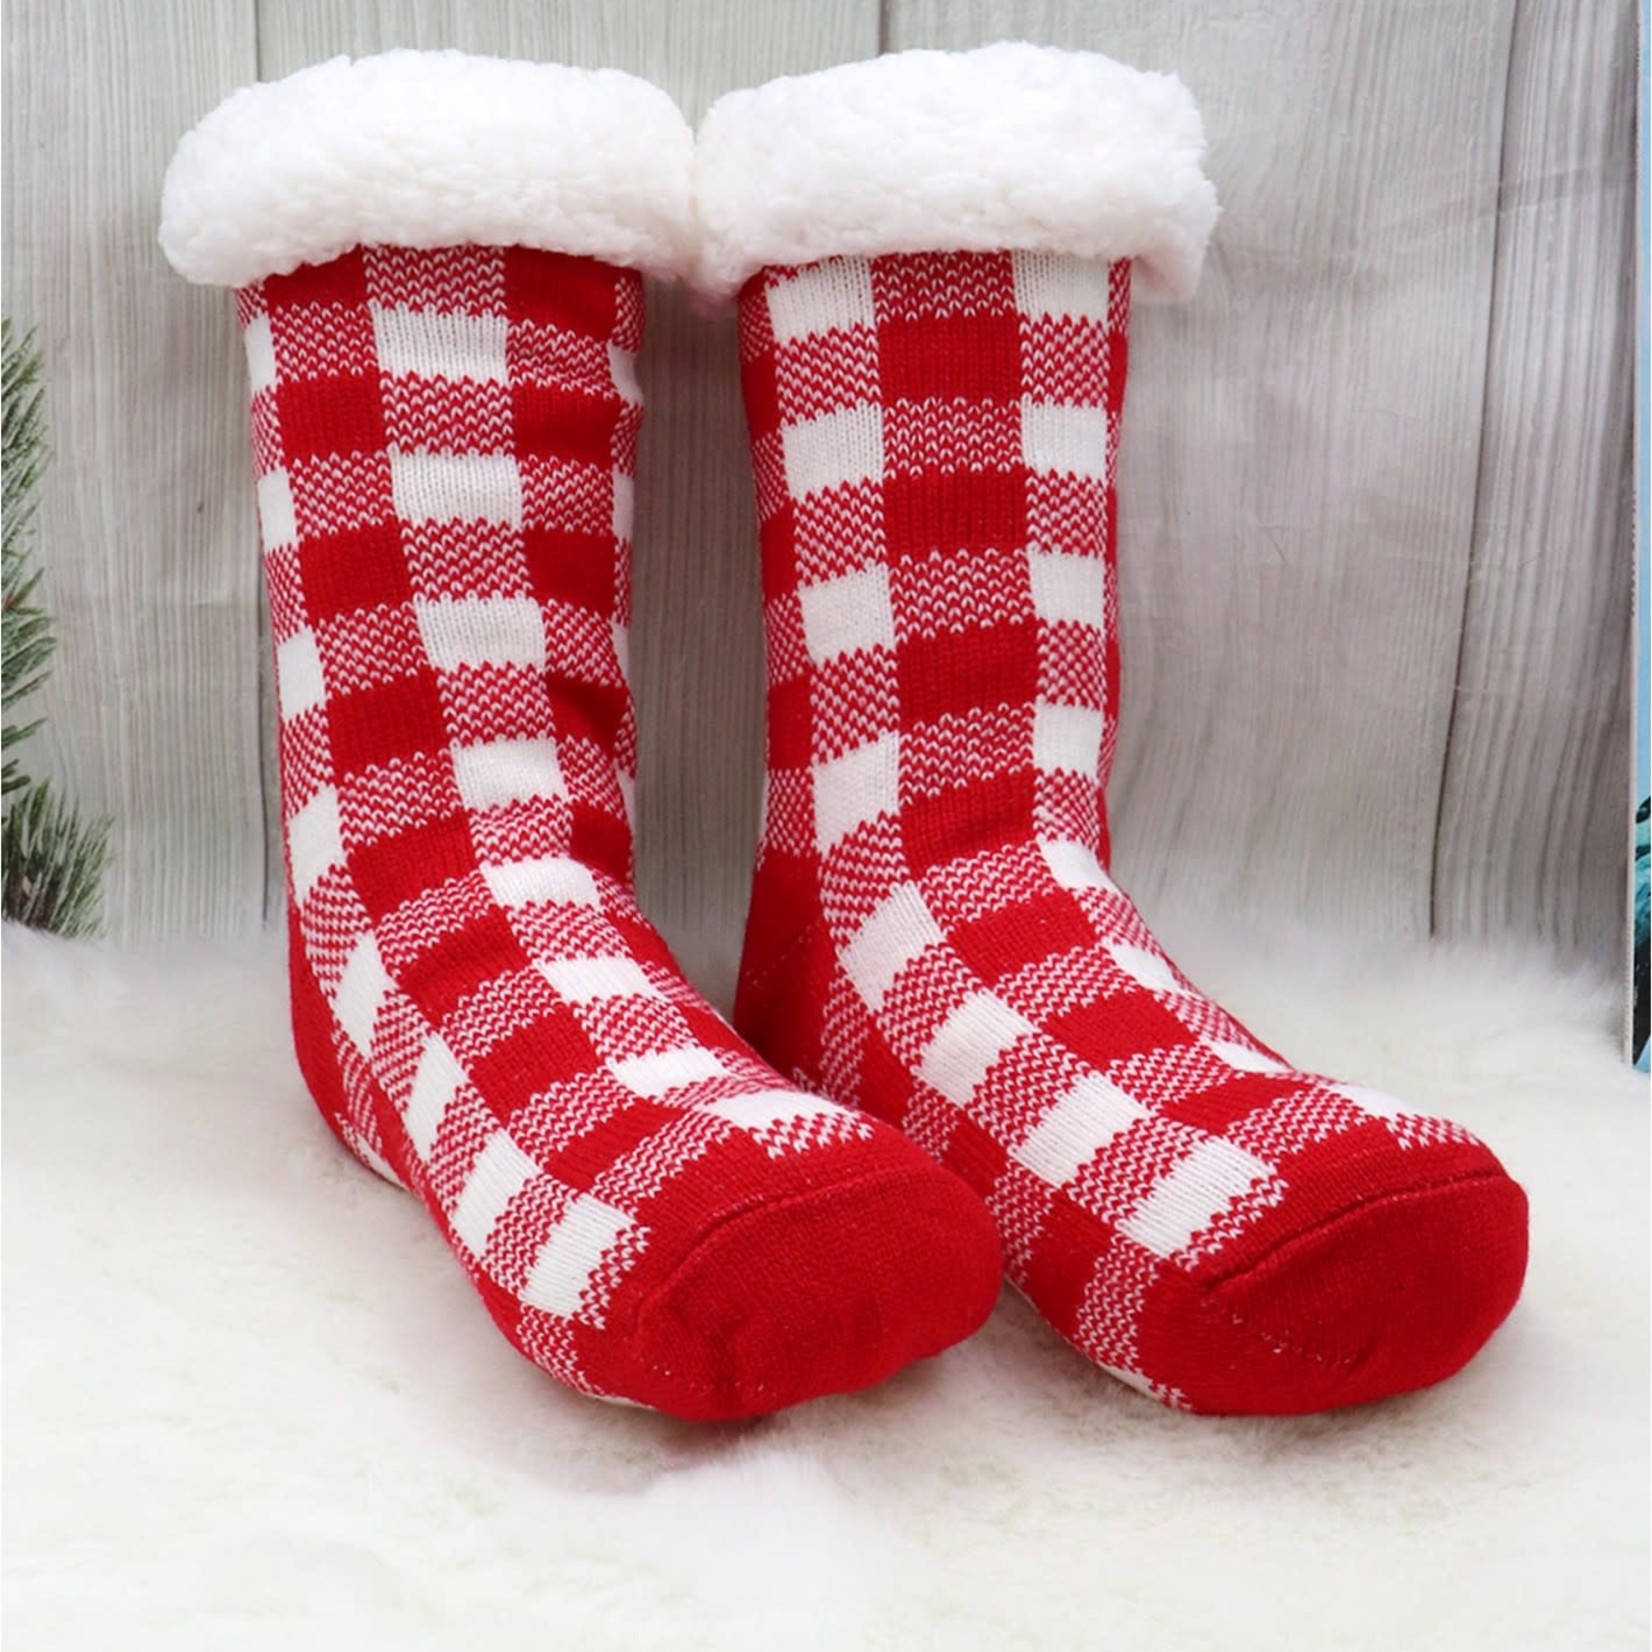 Plaid Indoor Anti-Skid Slipper Socks Red/White - Klomps Home and Garden